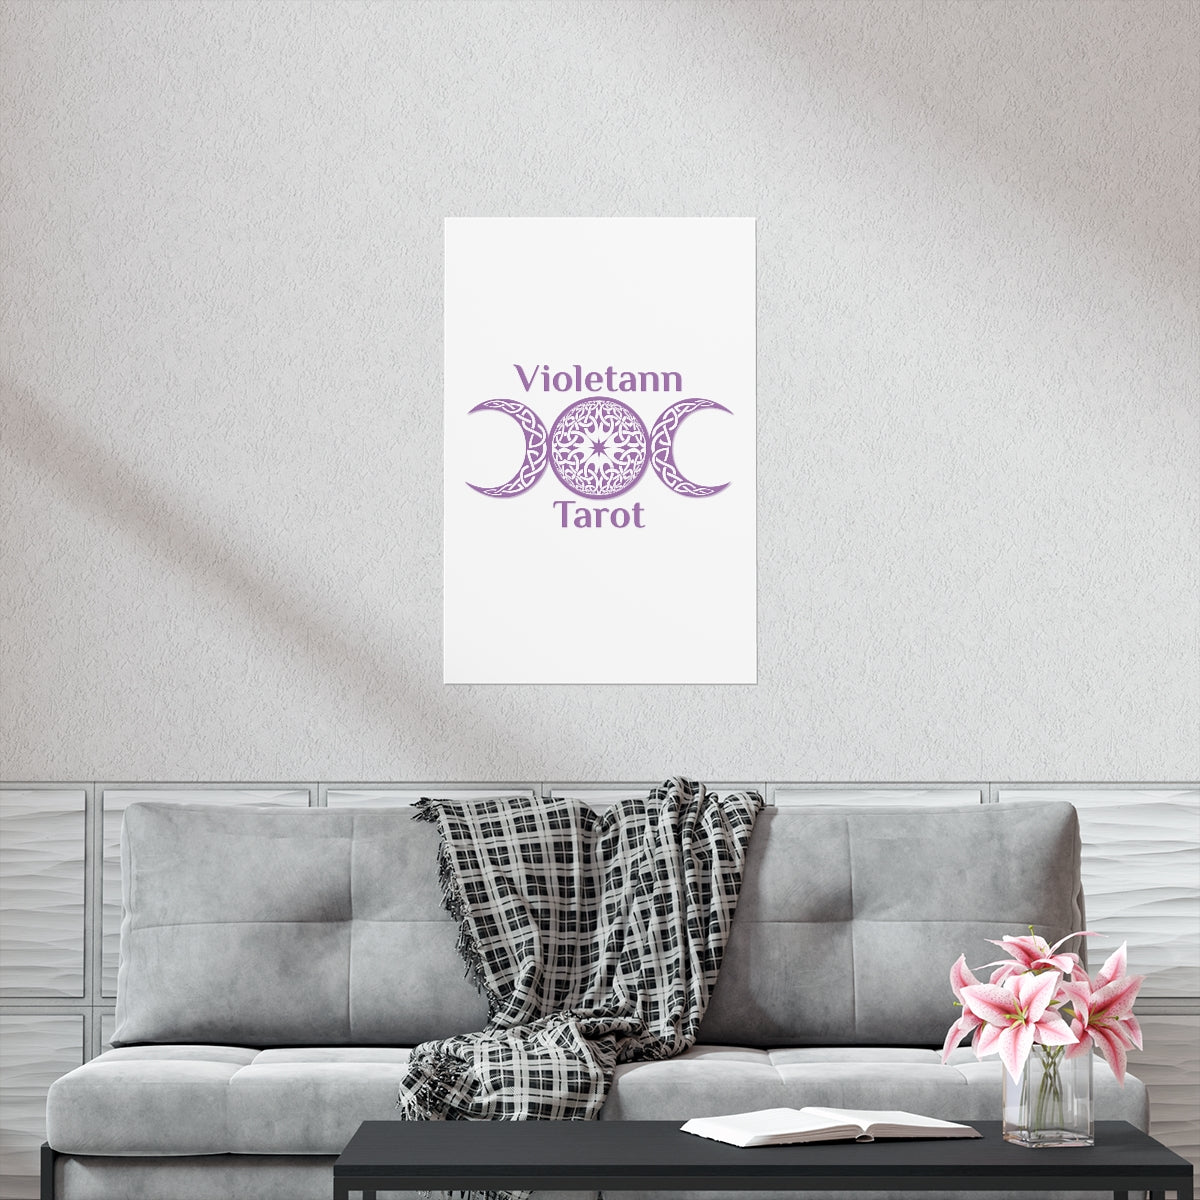 Violetann Tarot Logo Poster